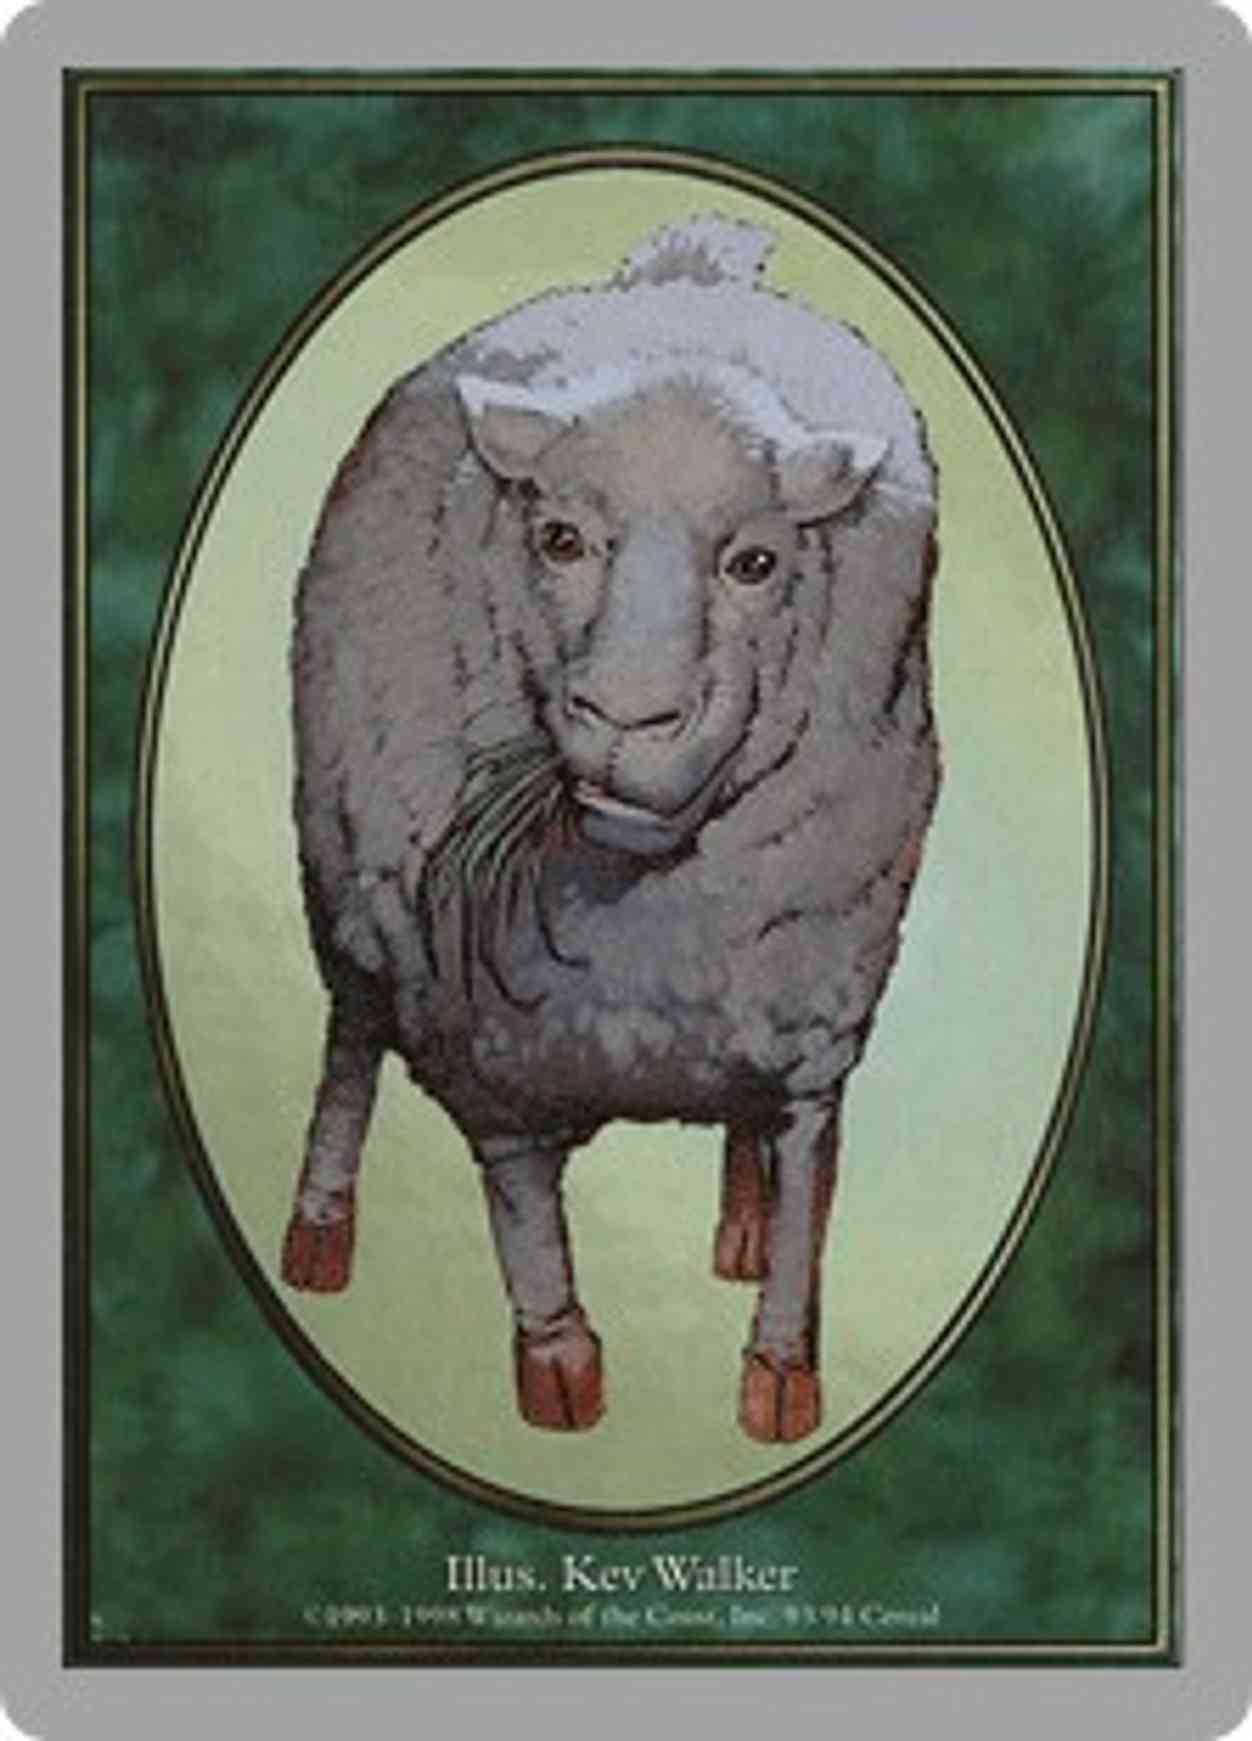 Sheep Token magic card front